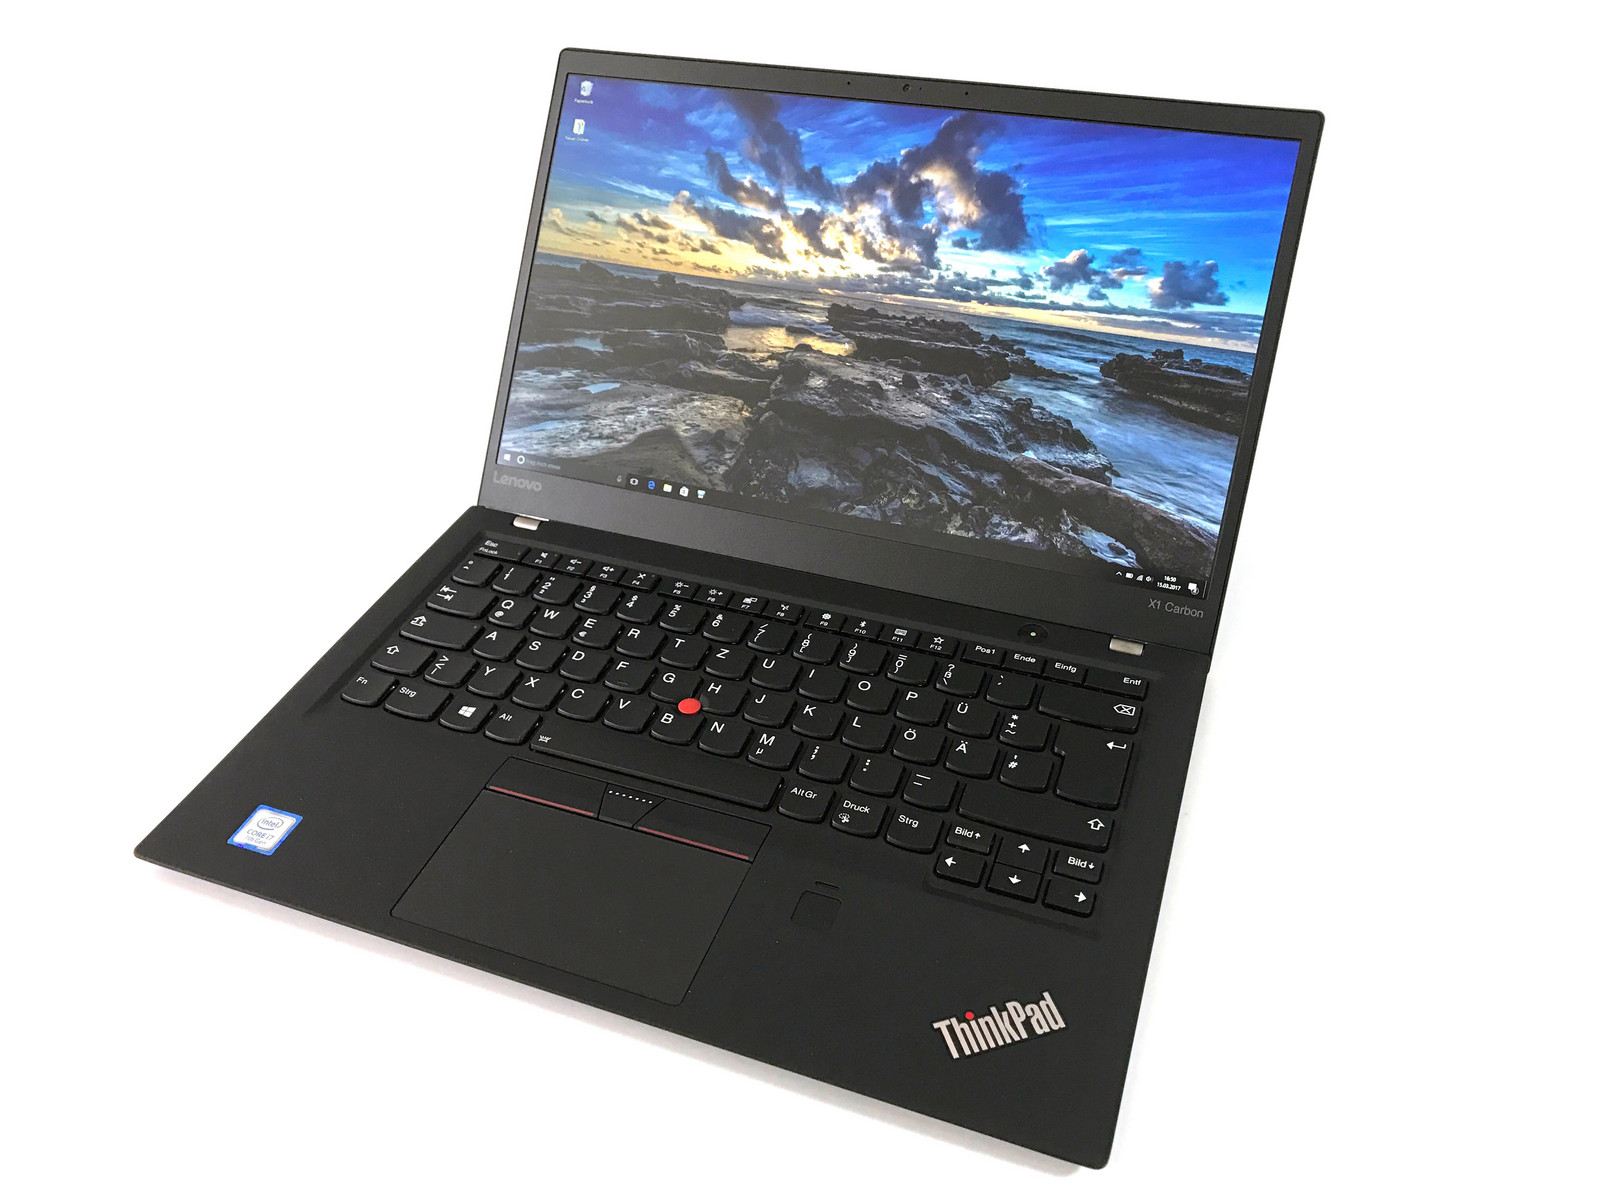 Loose screws: Partial recall of the Lenovo ThinkPad X1